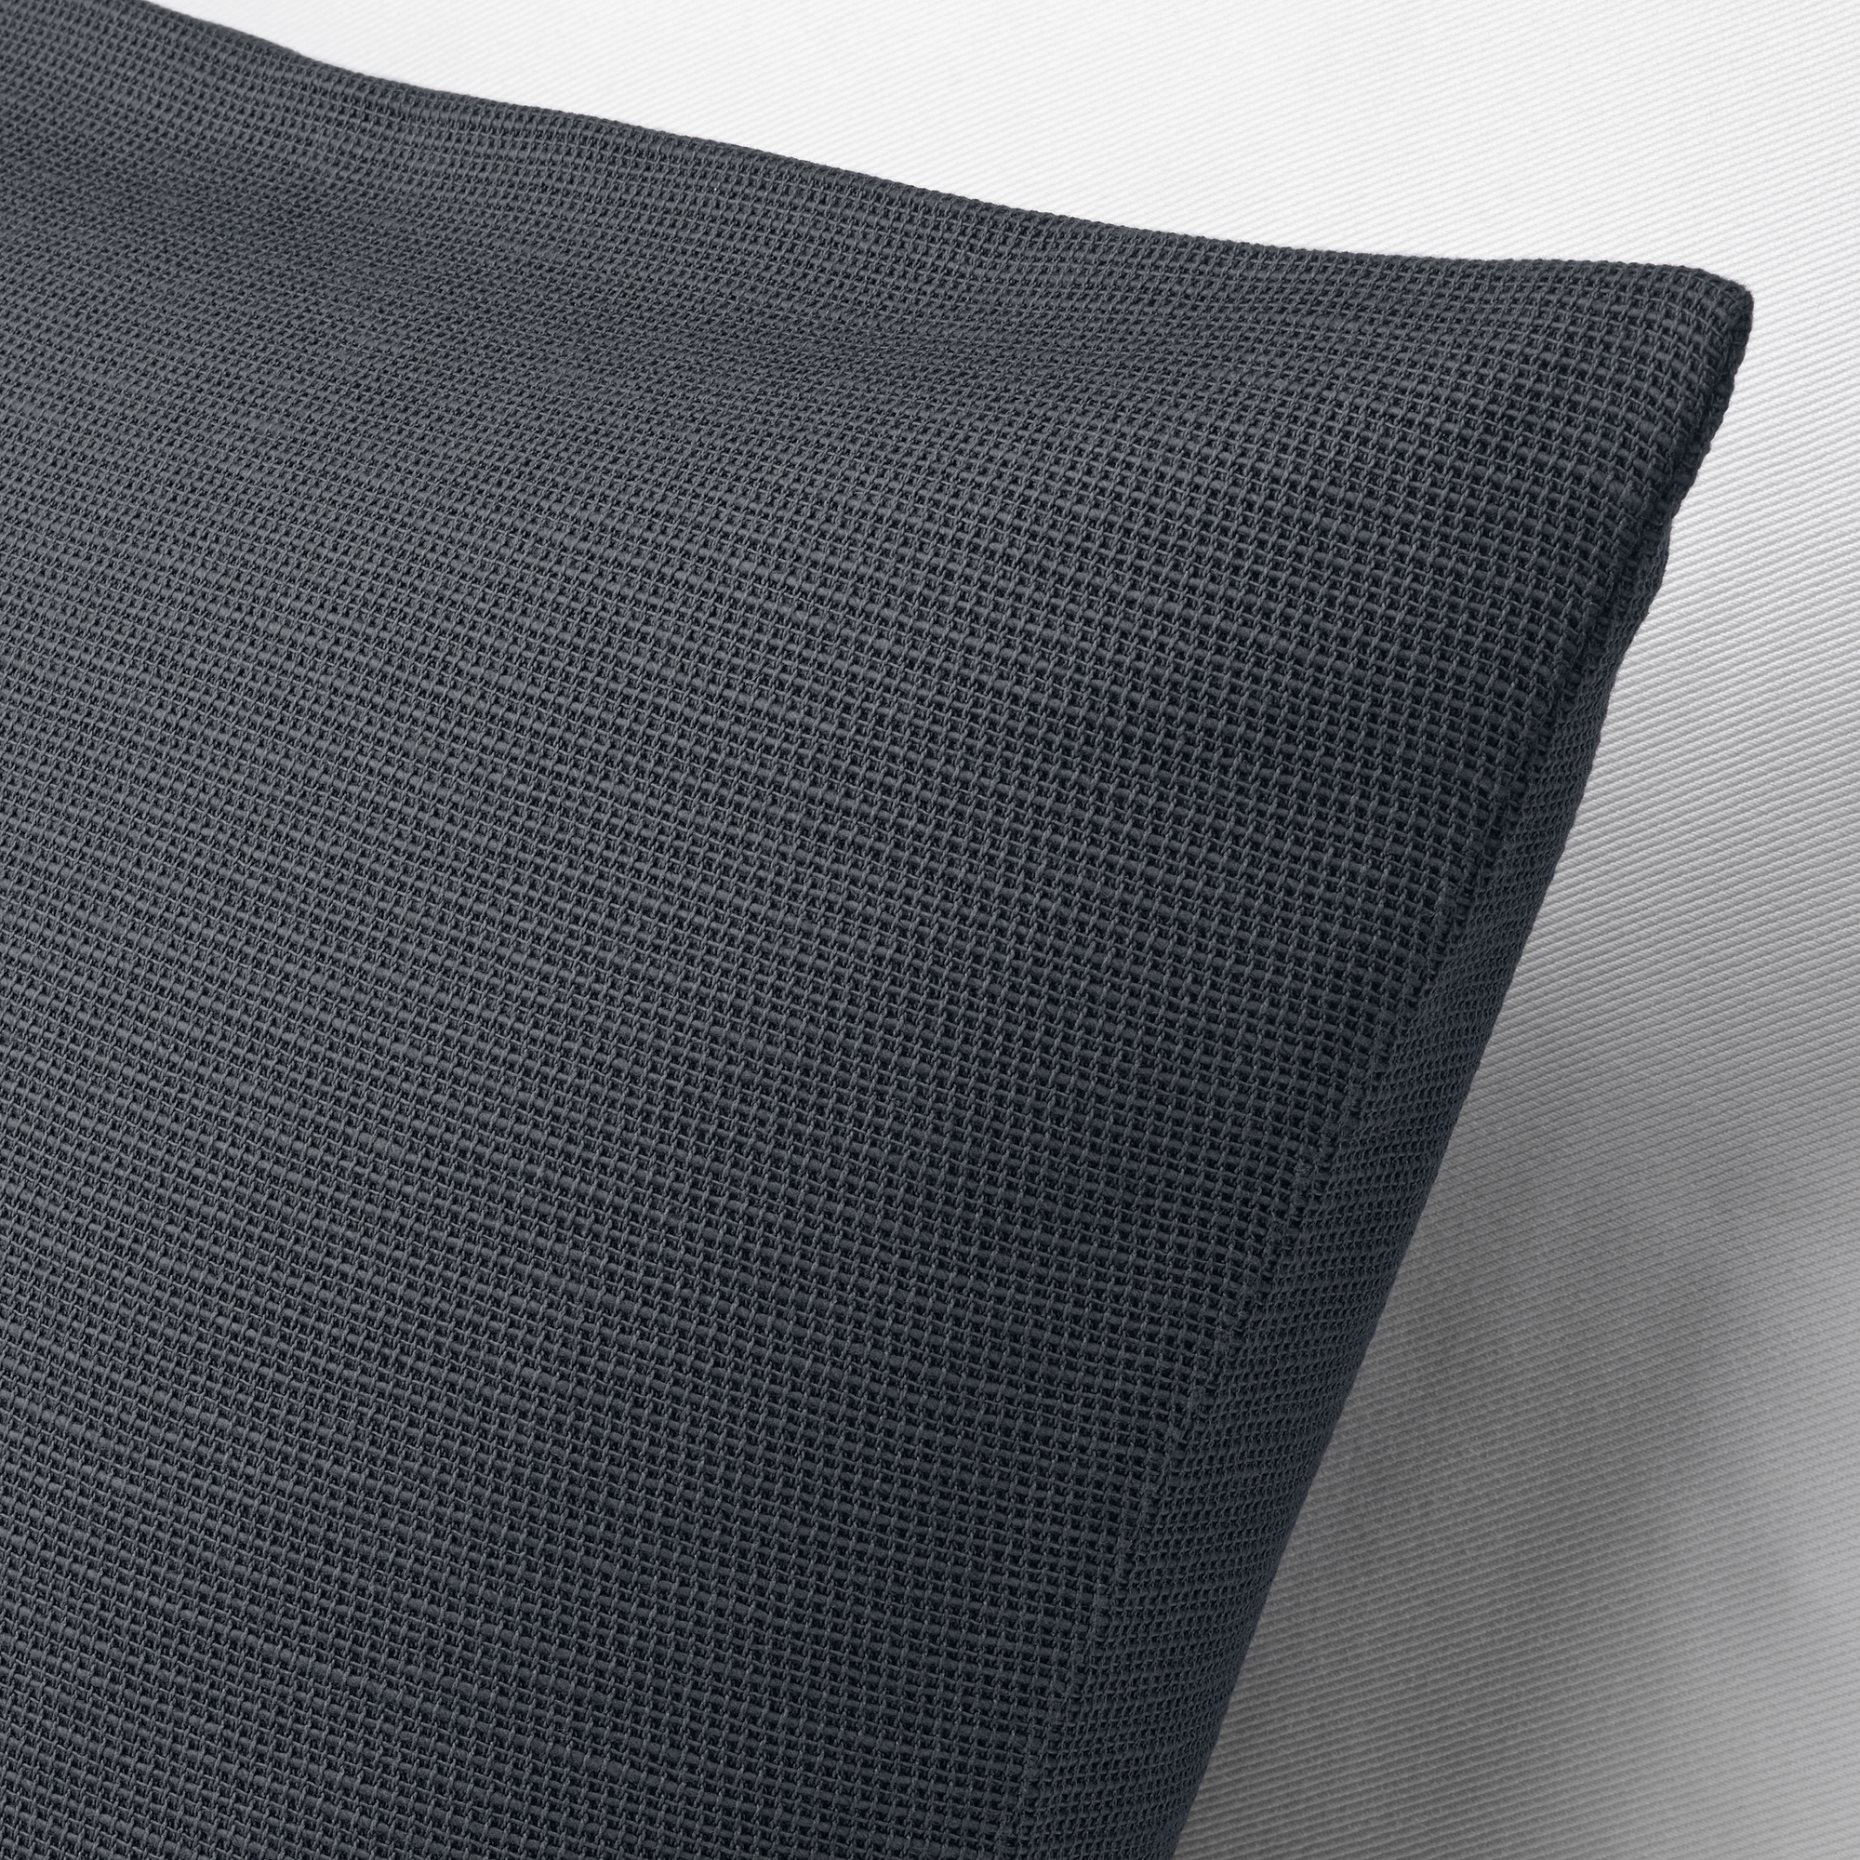 JORDTISTEL, cushion cover, 50x50 cm, 705.307.94